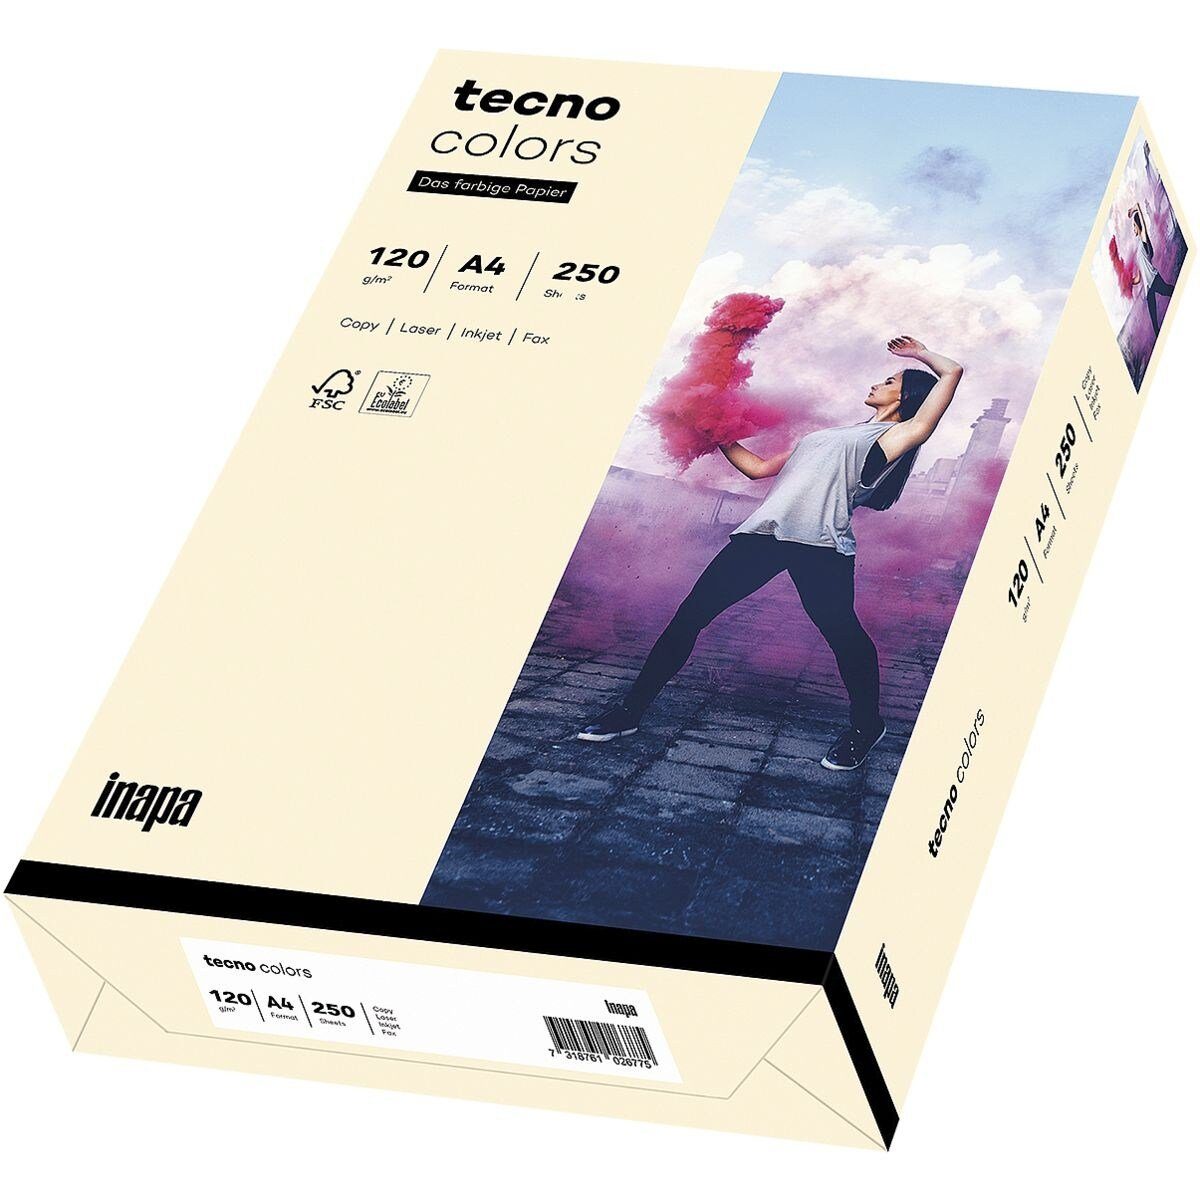 Inapa tecno Drucker- und Kopierpapier Rainbow / tecno Colors, Pastellfarben, Format DIN A4, 120 g/m², 250 Blatt hellchamois | Papier